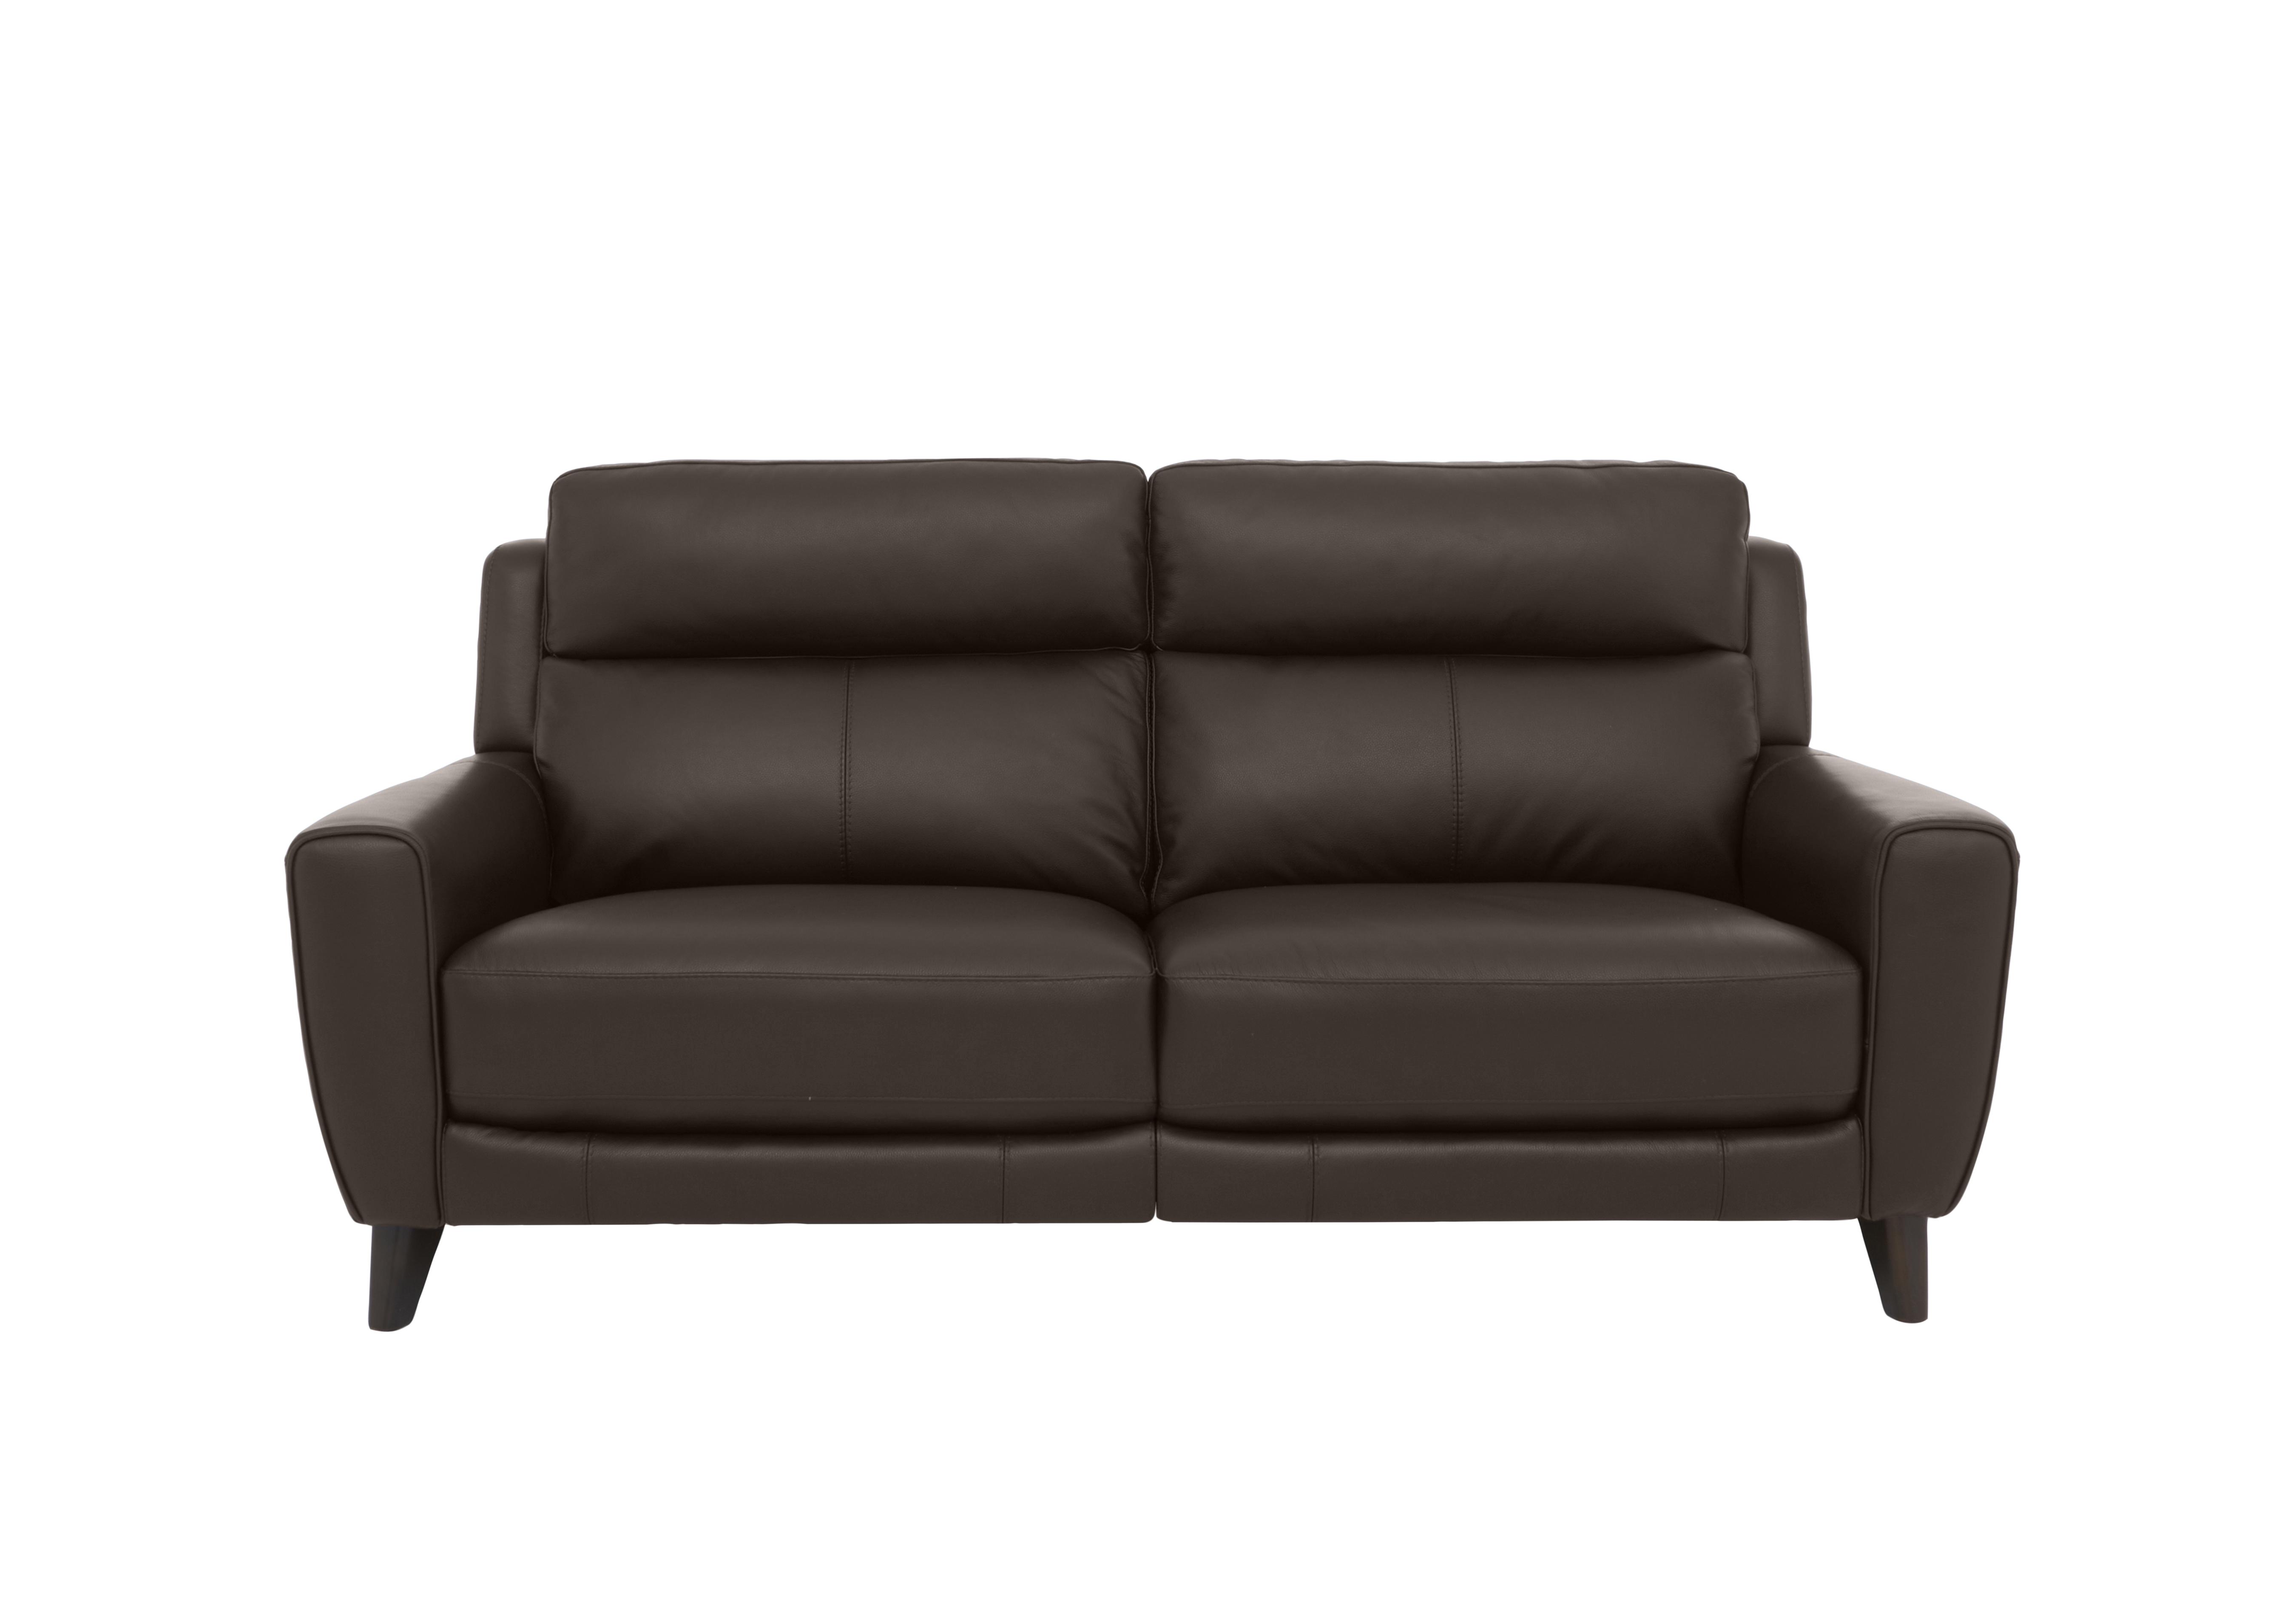 Zen 3 Seater Leather Sofa in Bx-037c Walnut on Furniture Village